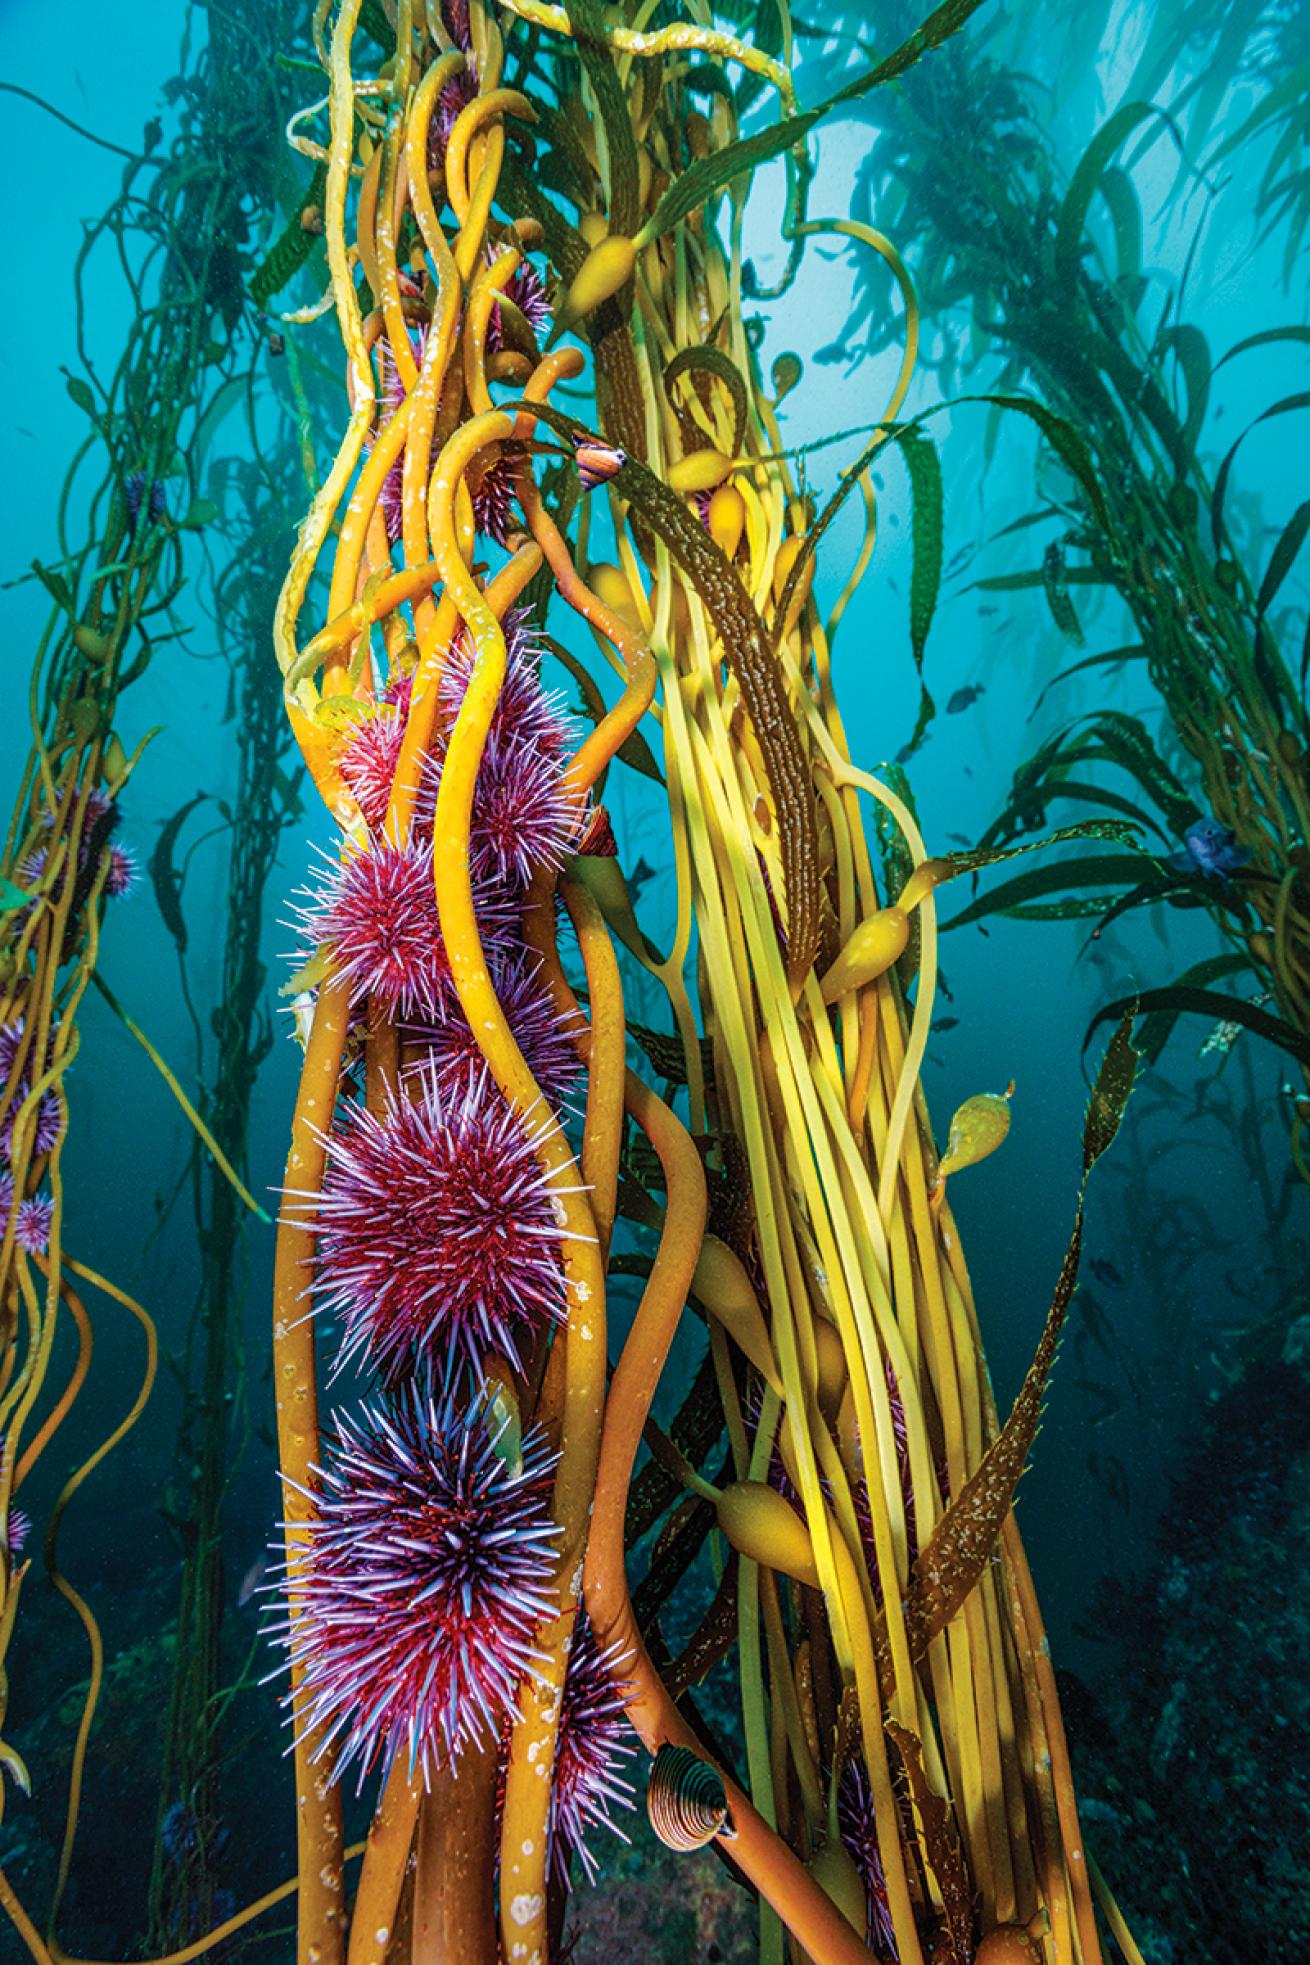 Urchins on kelp